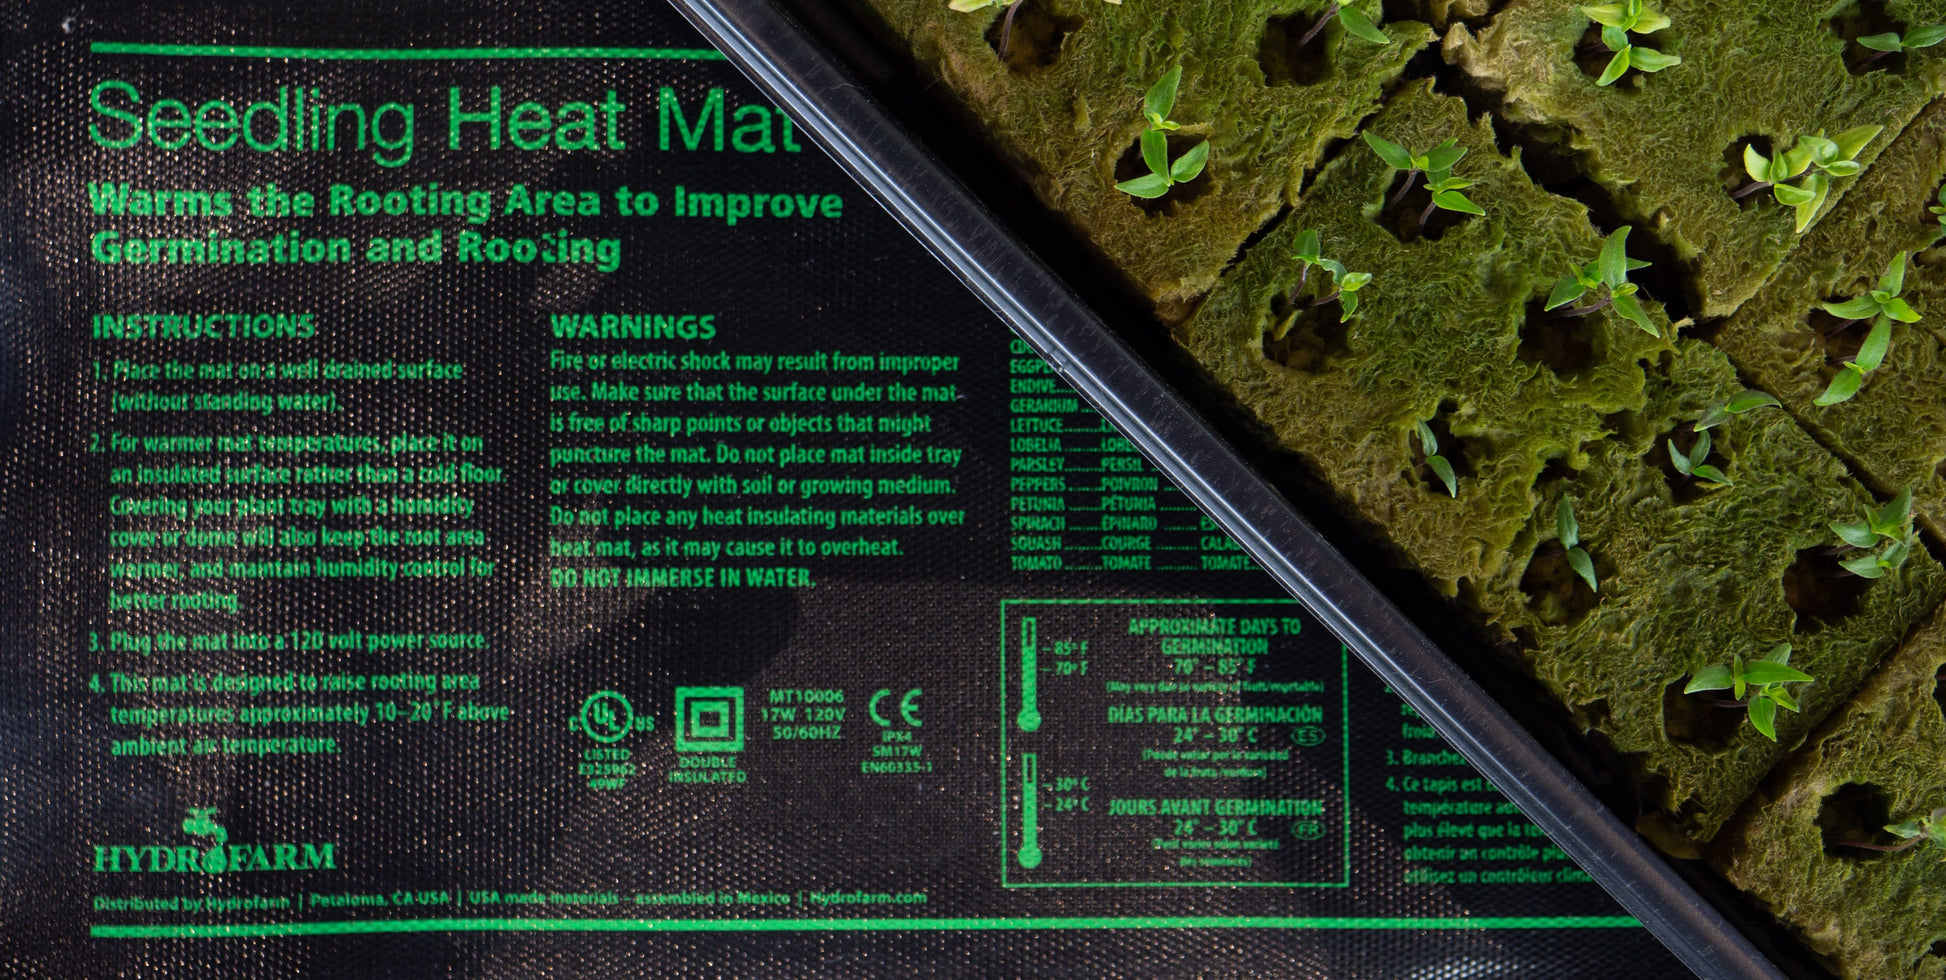 Hydrofarm Seedling Heat Mat